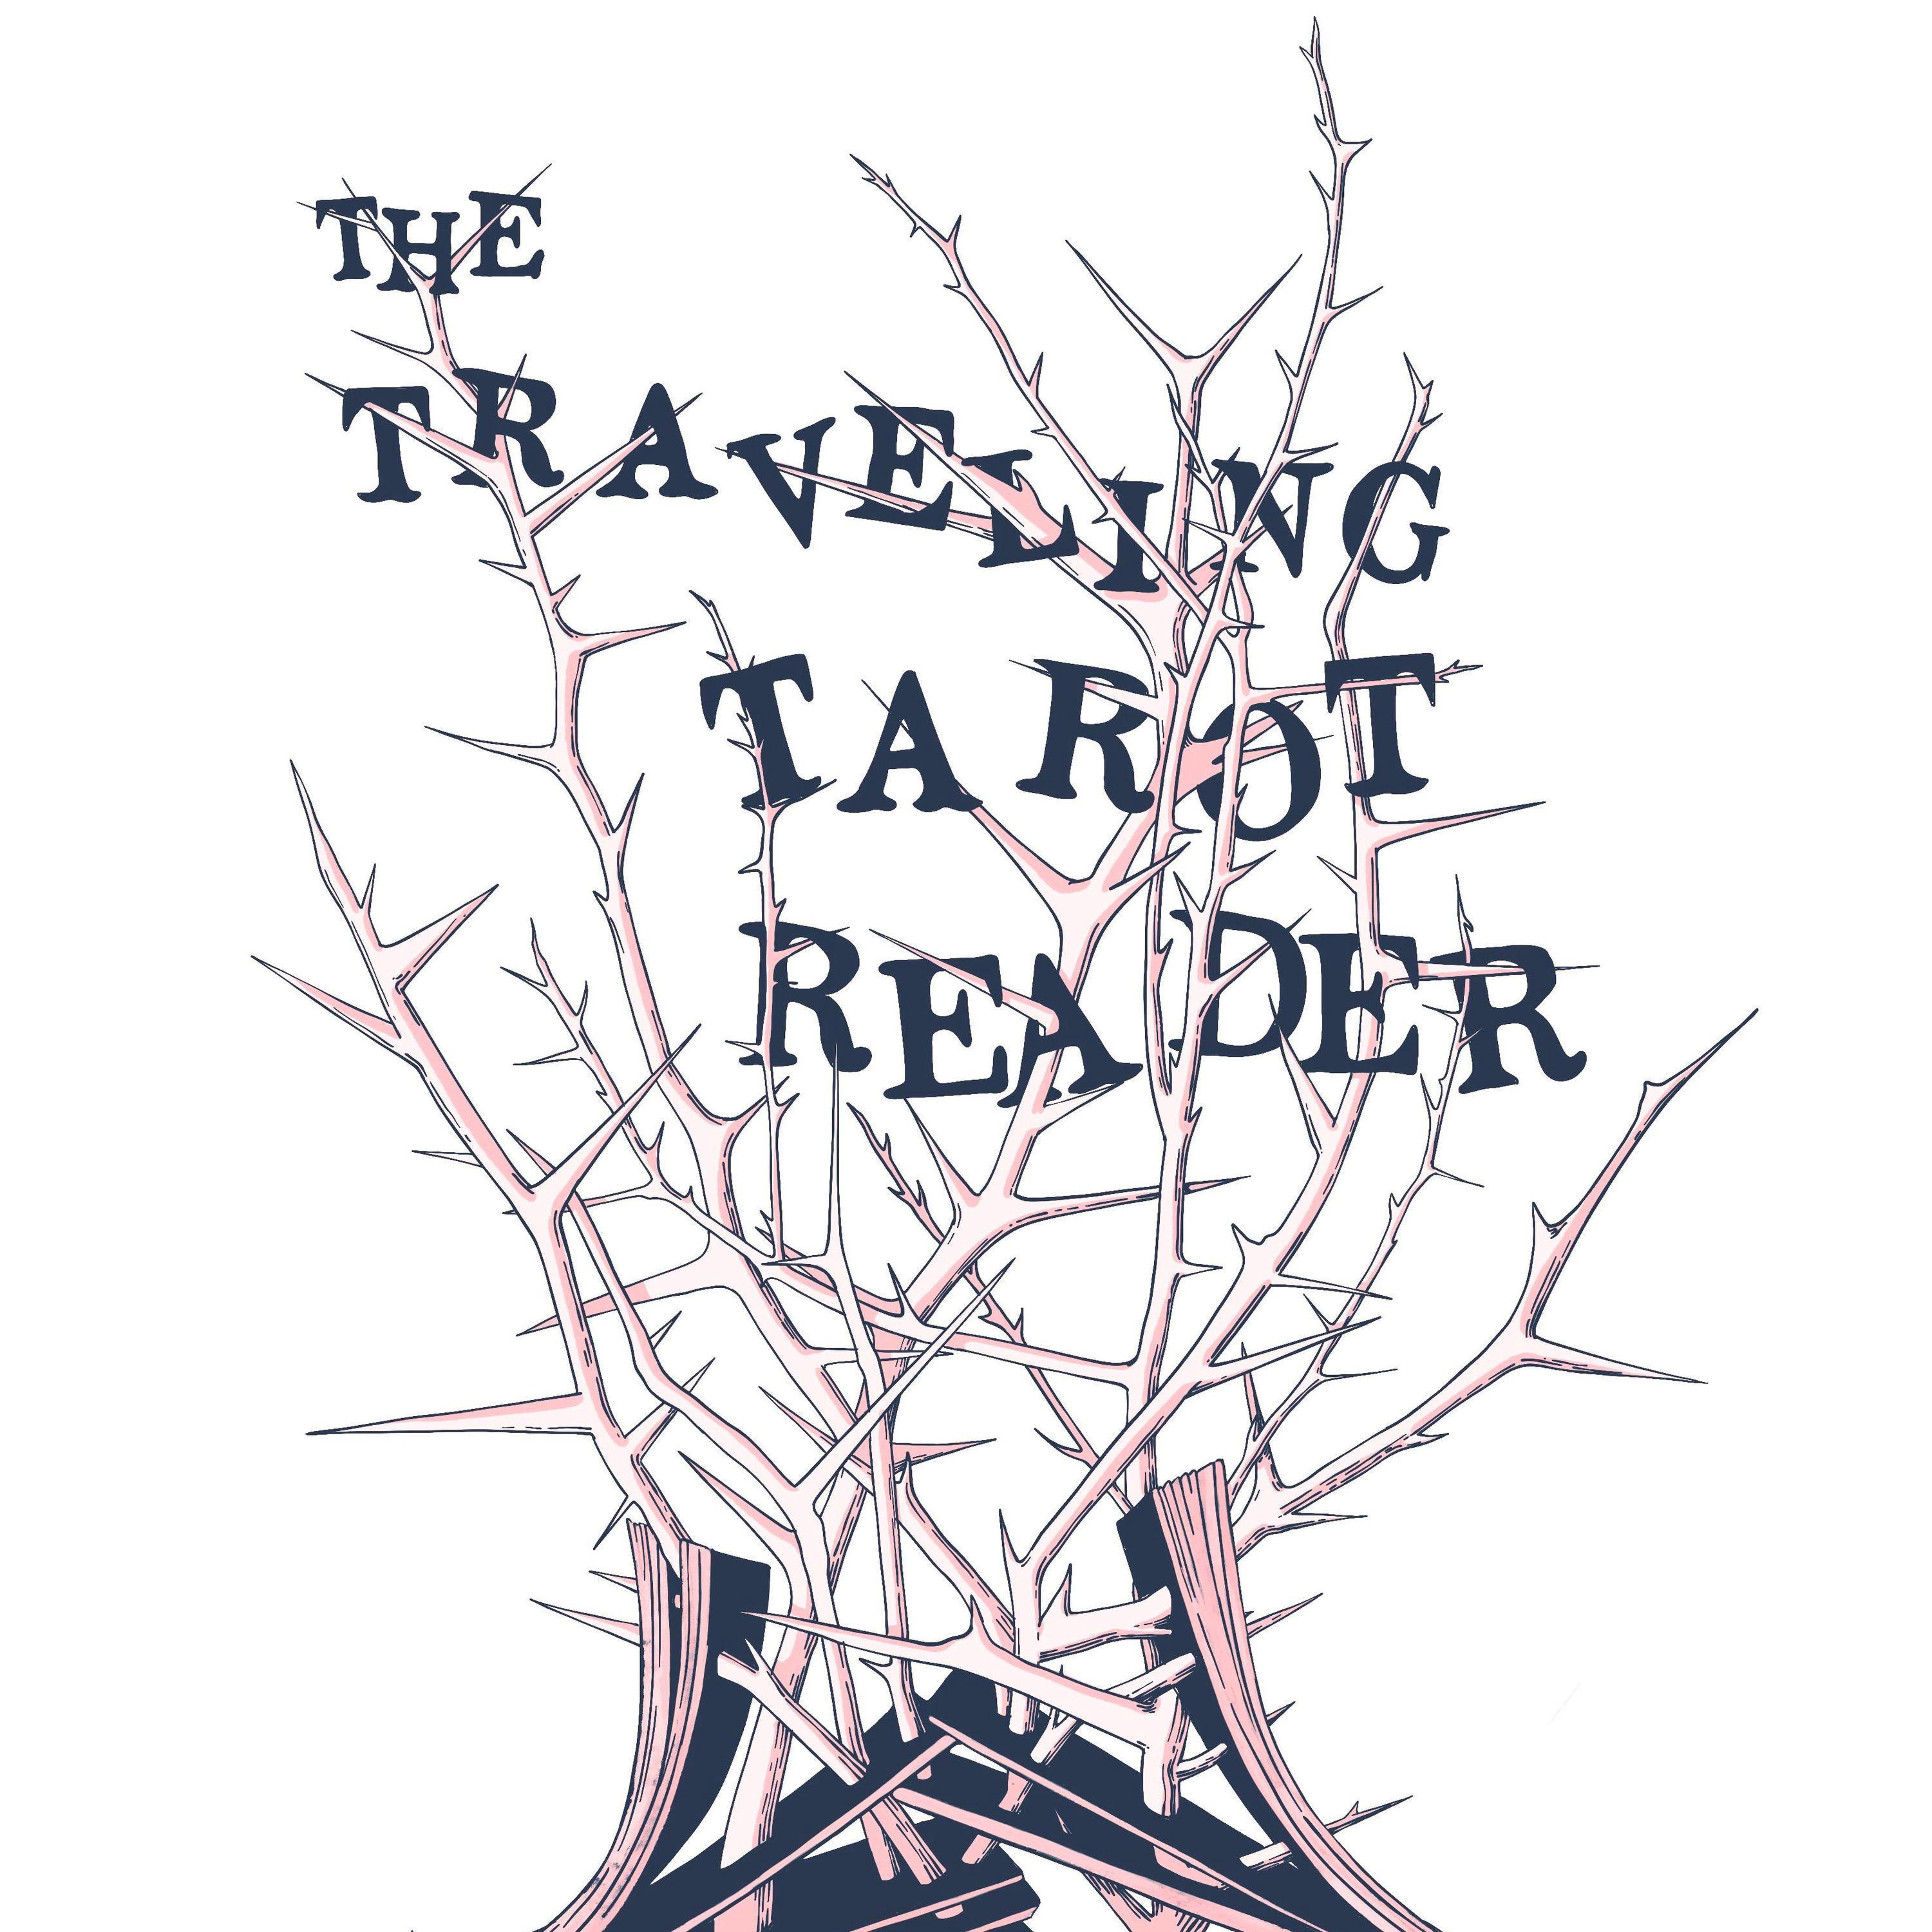 Thumbnail for "219 - The Traveling Tarot Reader".